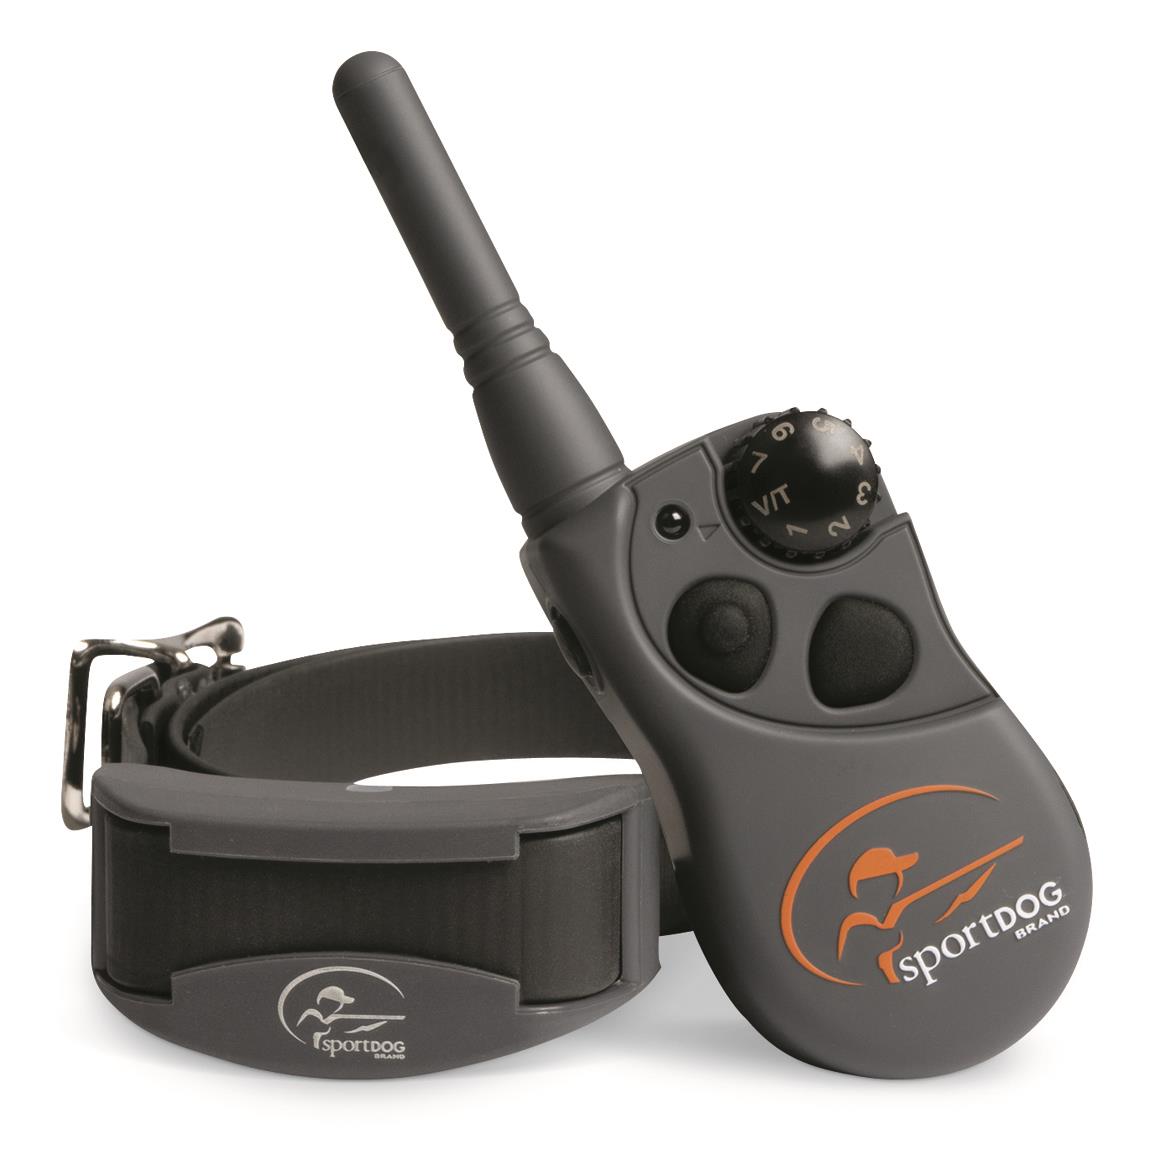 SportDOG Brand FieldTrainer 425X Dog Training Collar